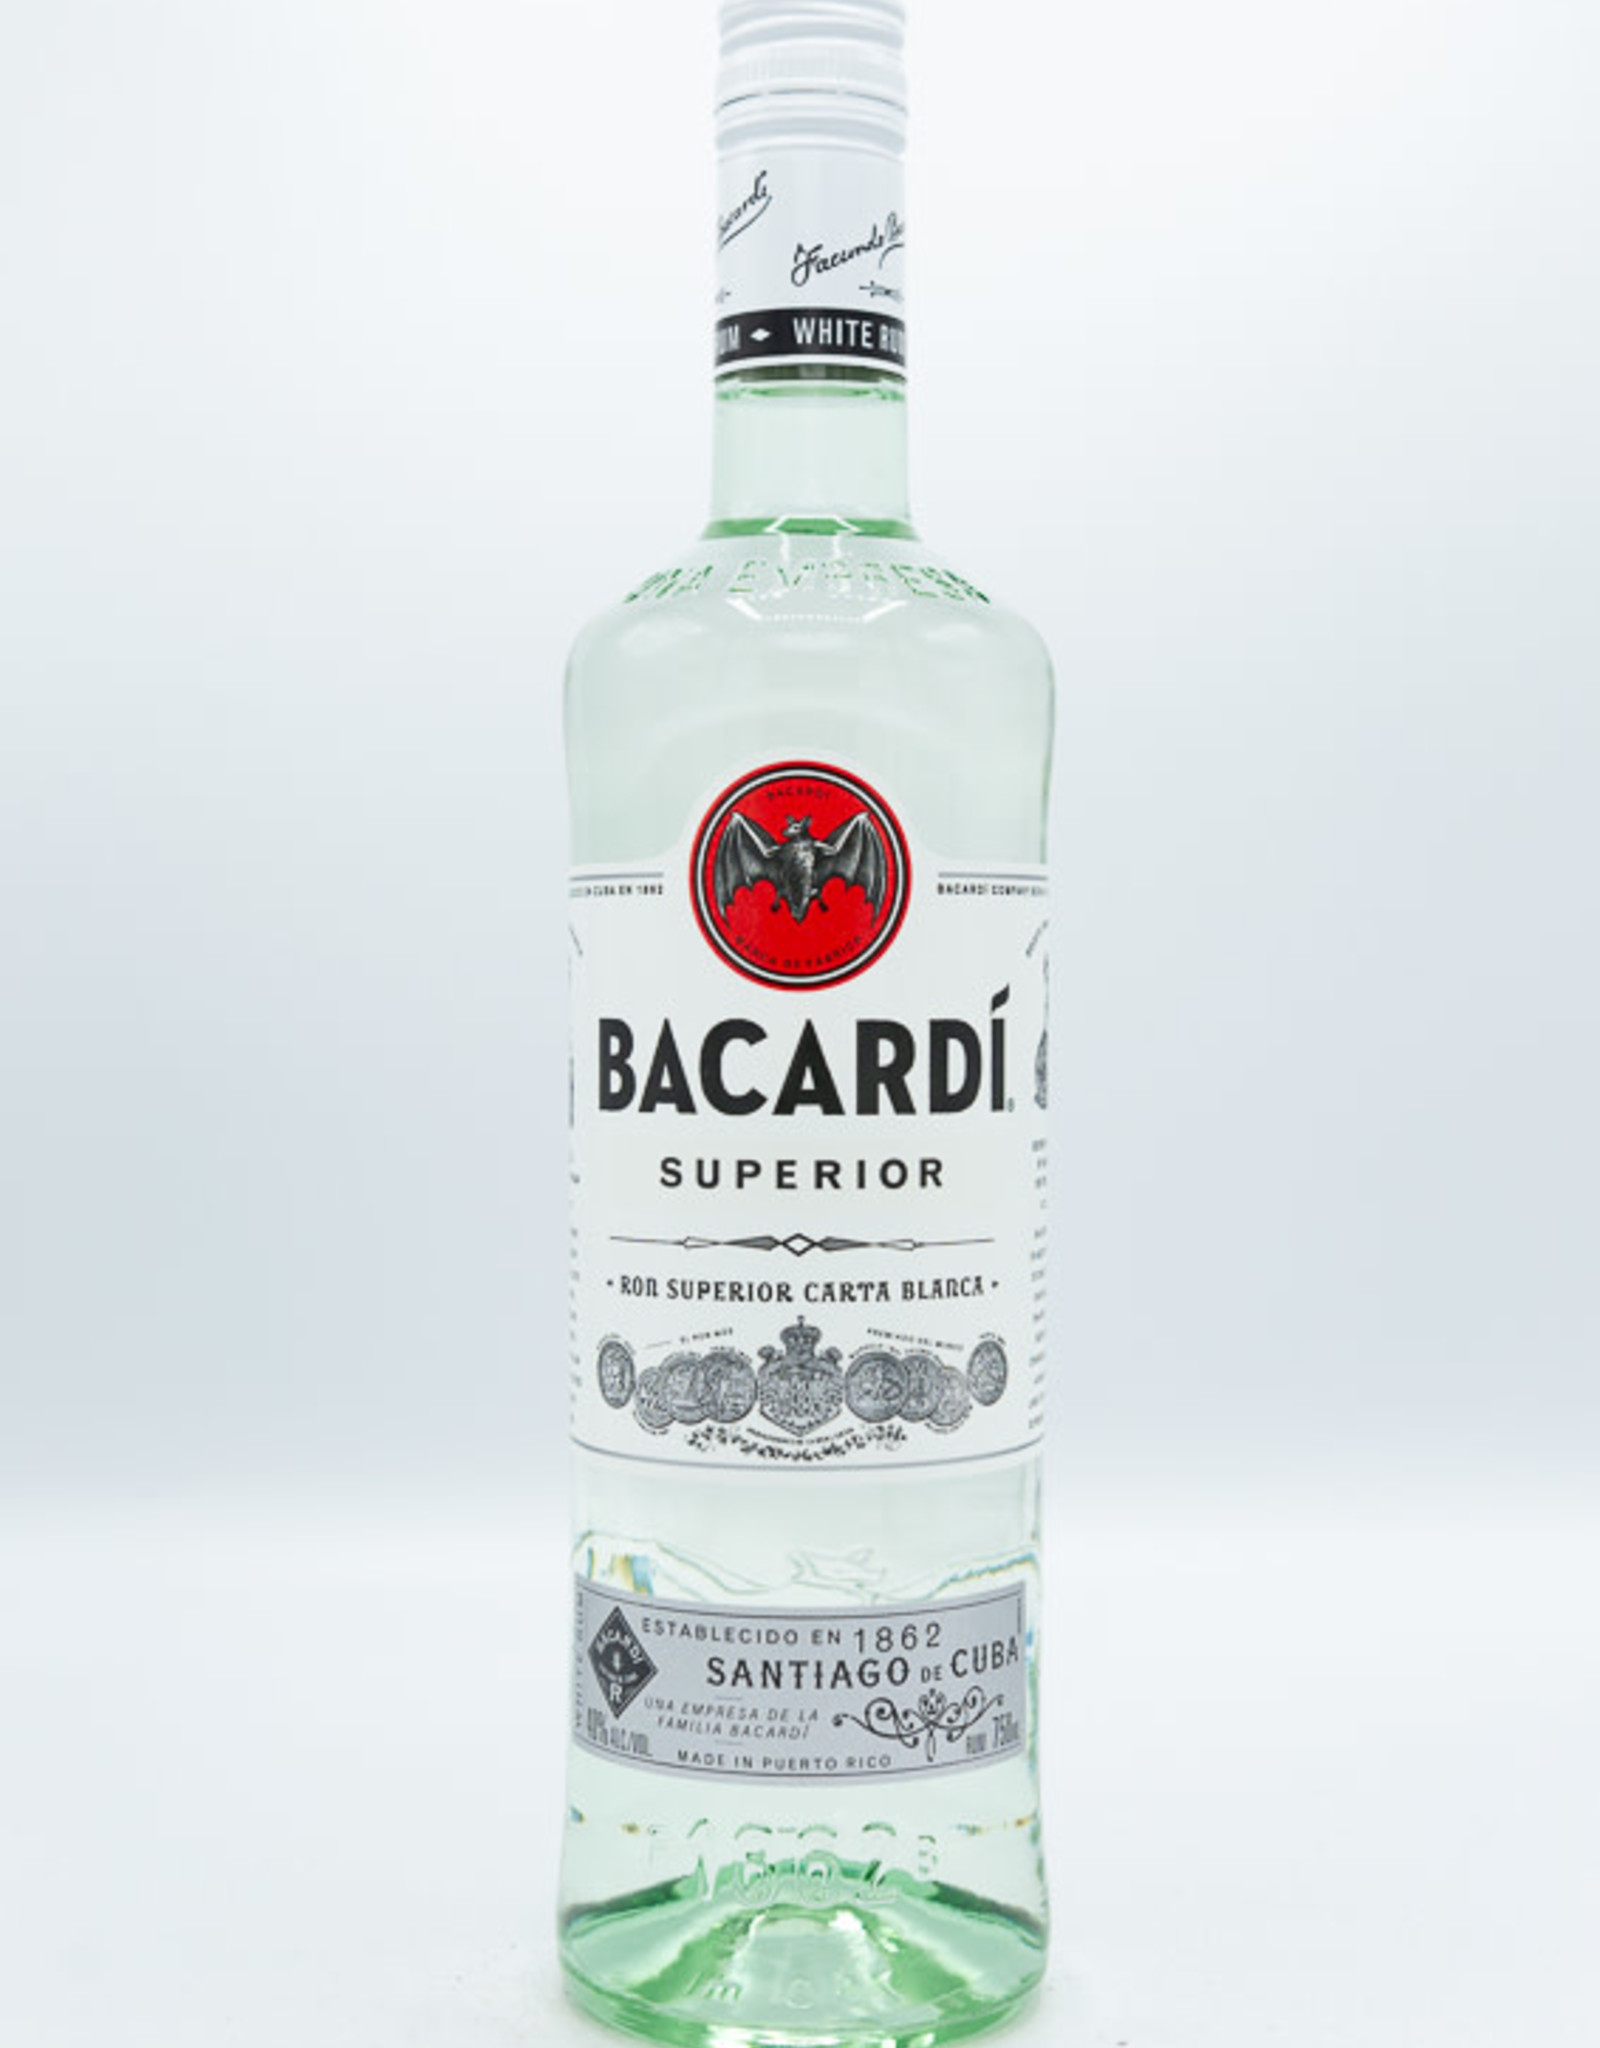 Bacardi Bacardi Superior White Rum